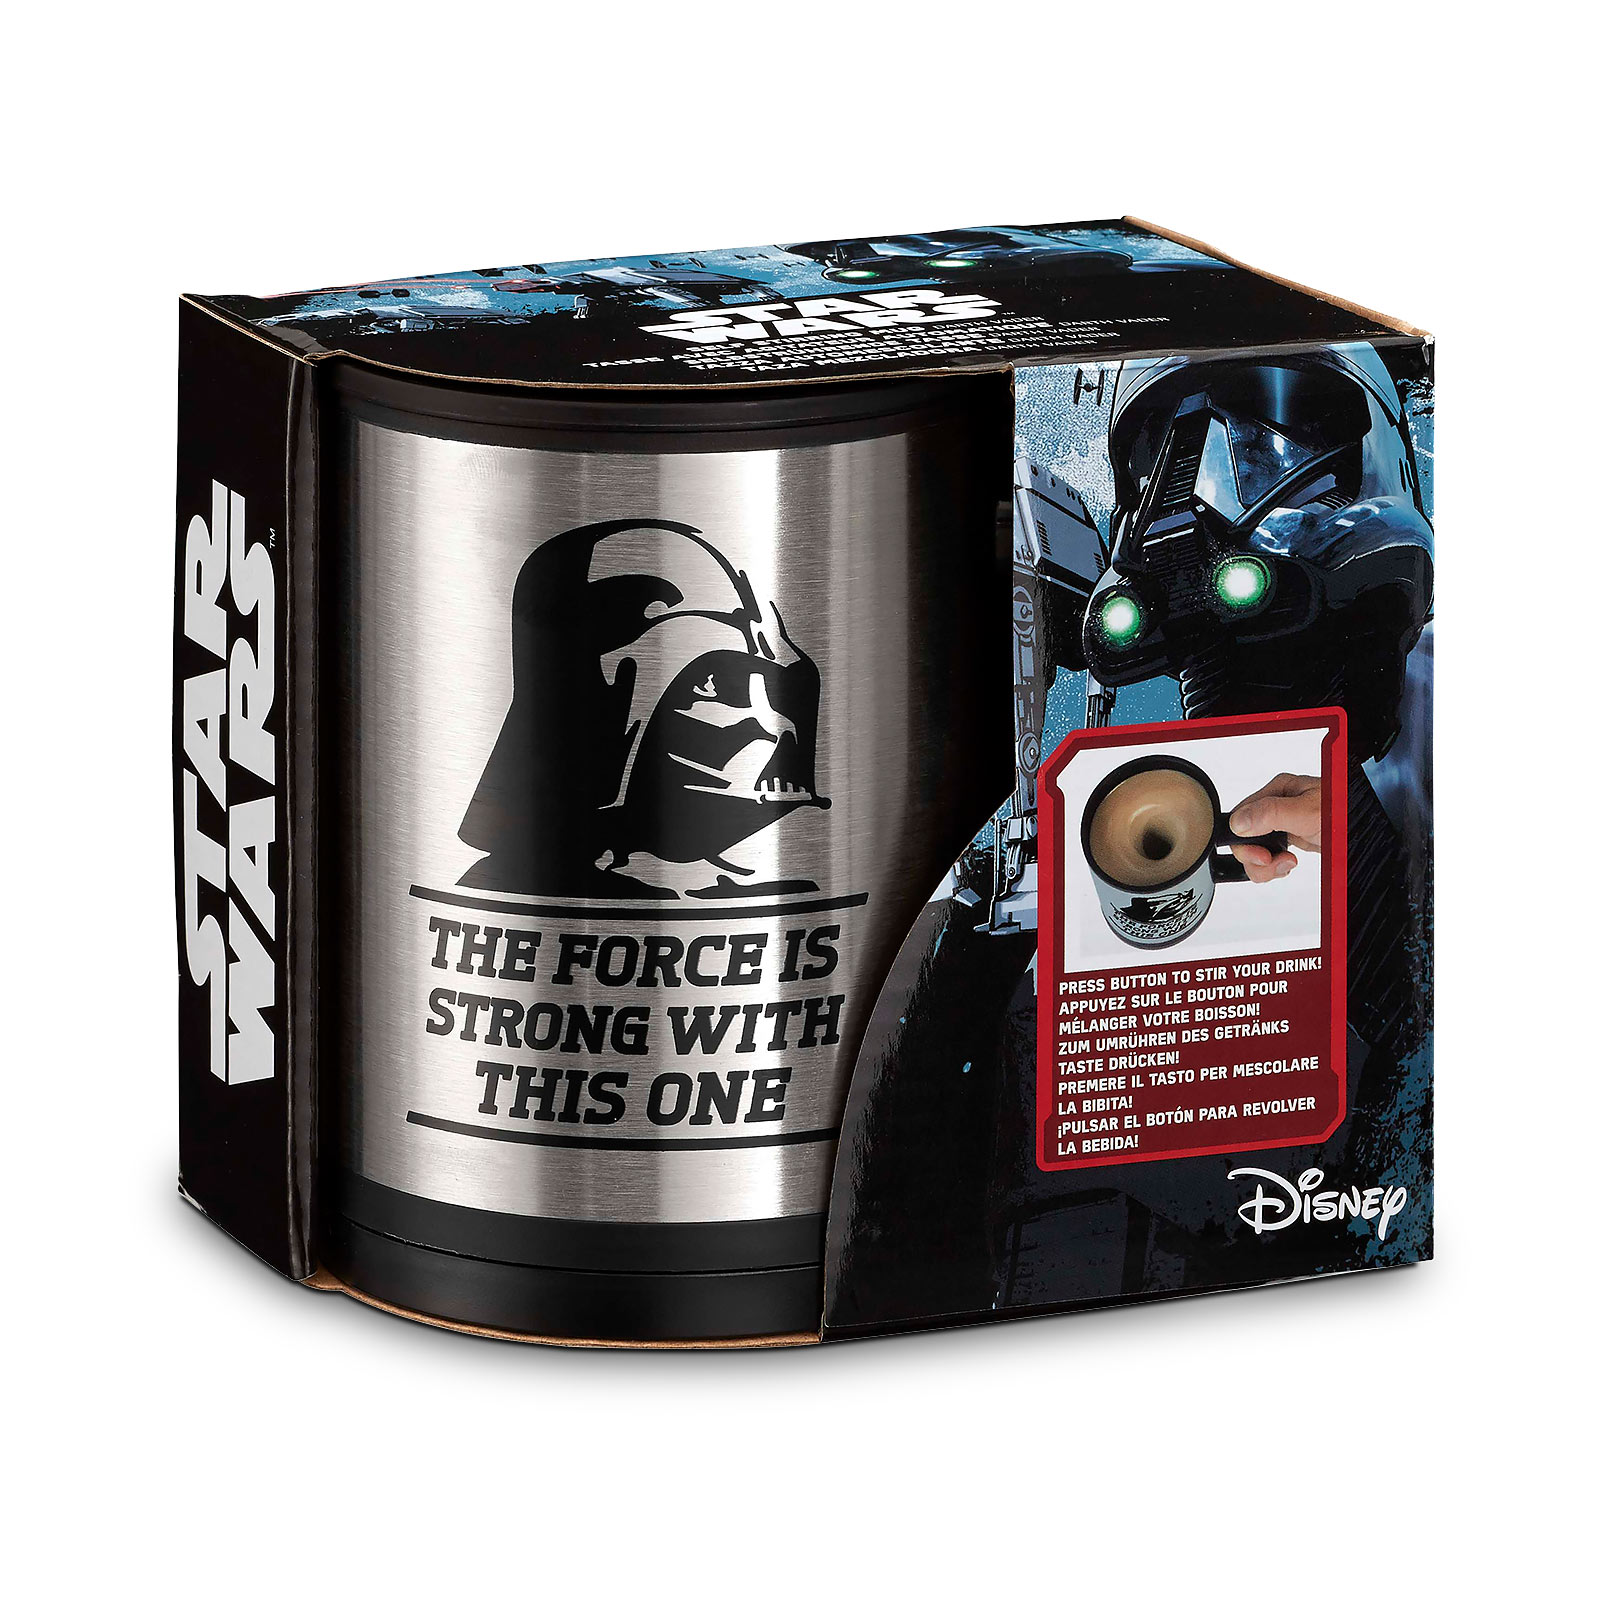 Star Wars - Mug thermique Vader avec fonction de mélange